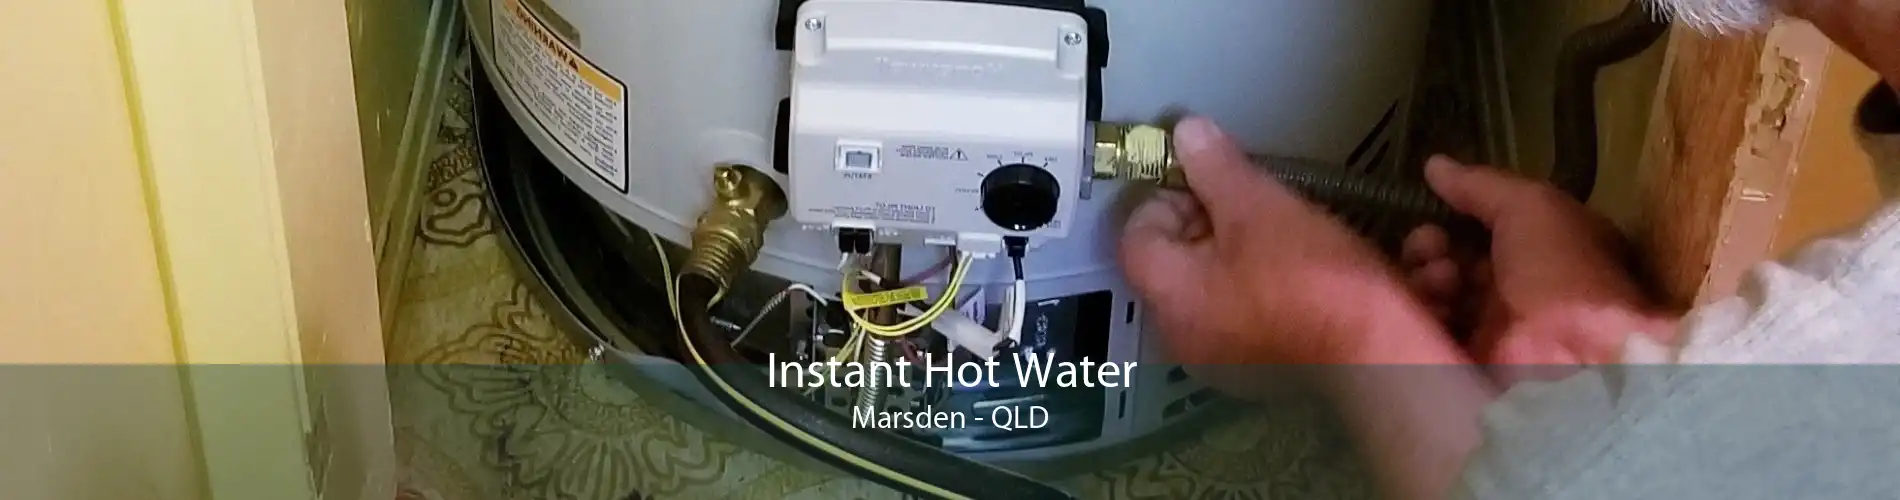 Instant Hot Water Marsden - QLD